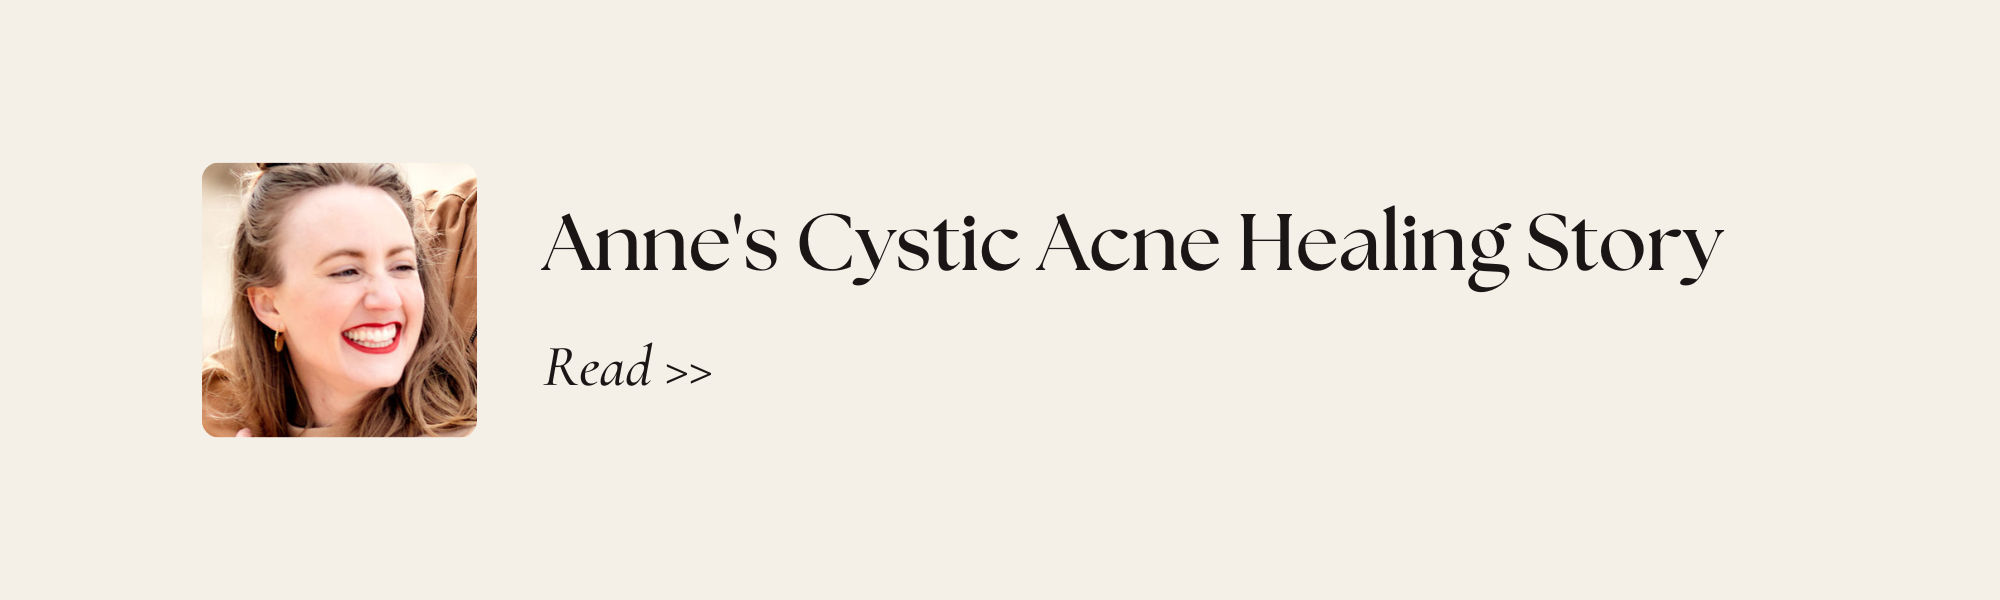 Read Anne's Acne Healing Story >> (Copy)